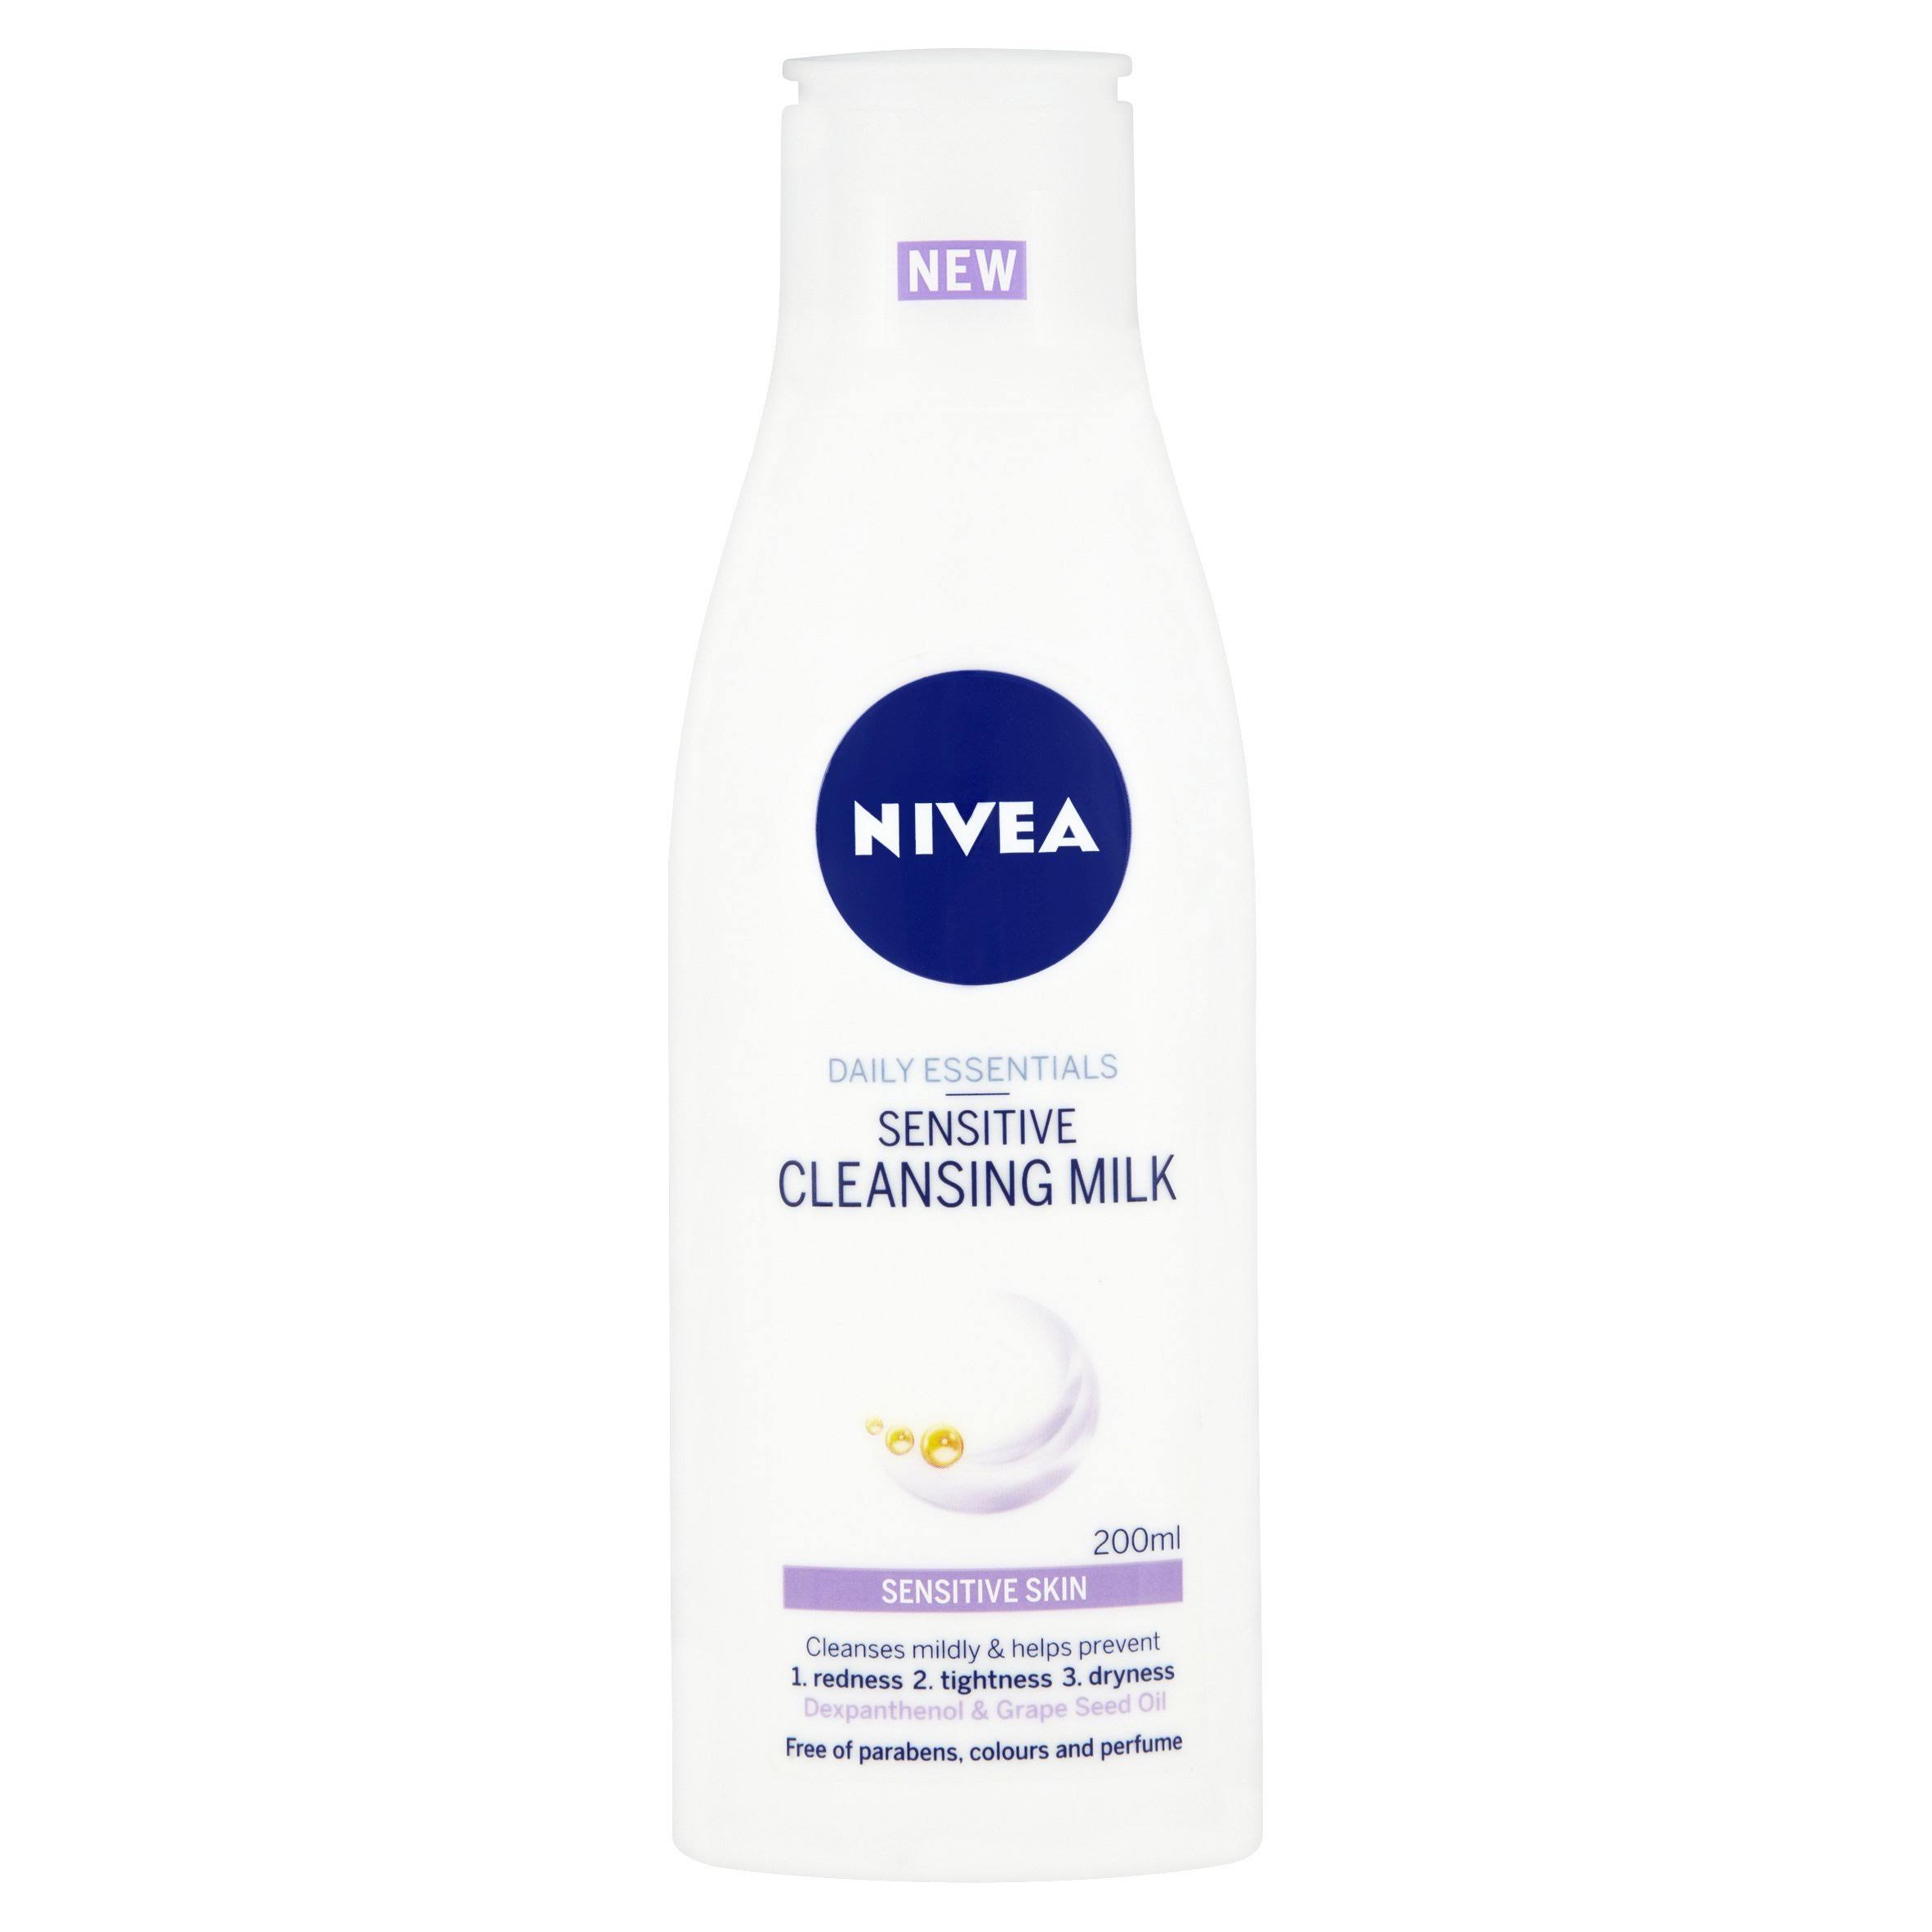 Nivea Daily Essentials Sensitive Cleansing Milk - 200ml